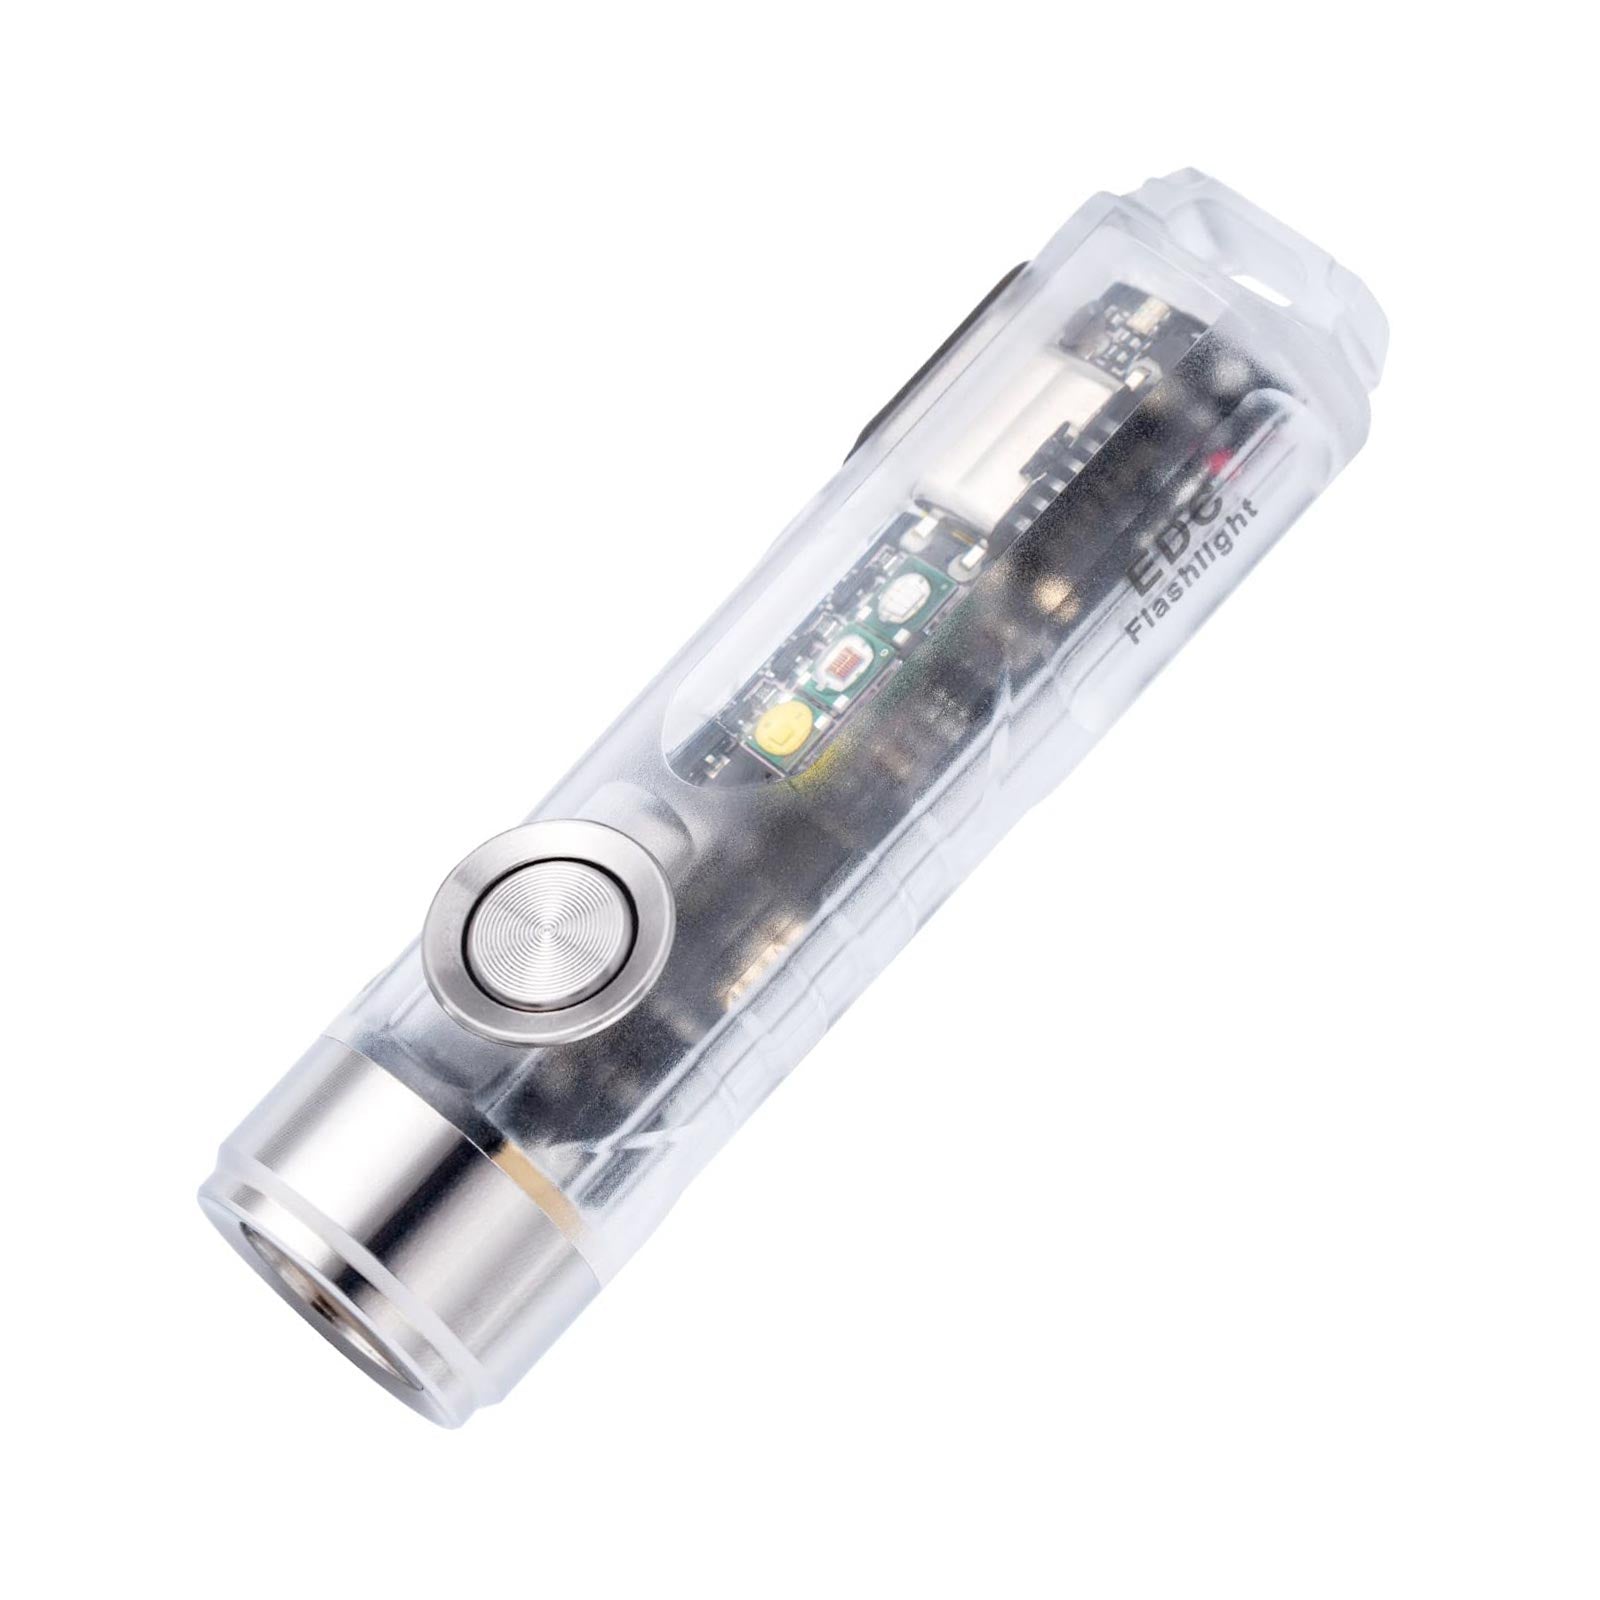 Battery-powered Mini Portable Edc Flashlight Emergency Lighting